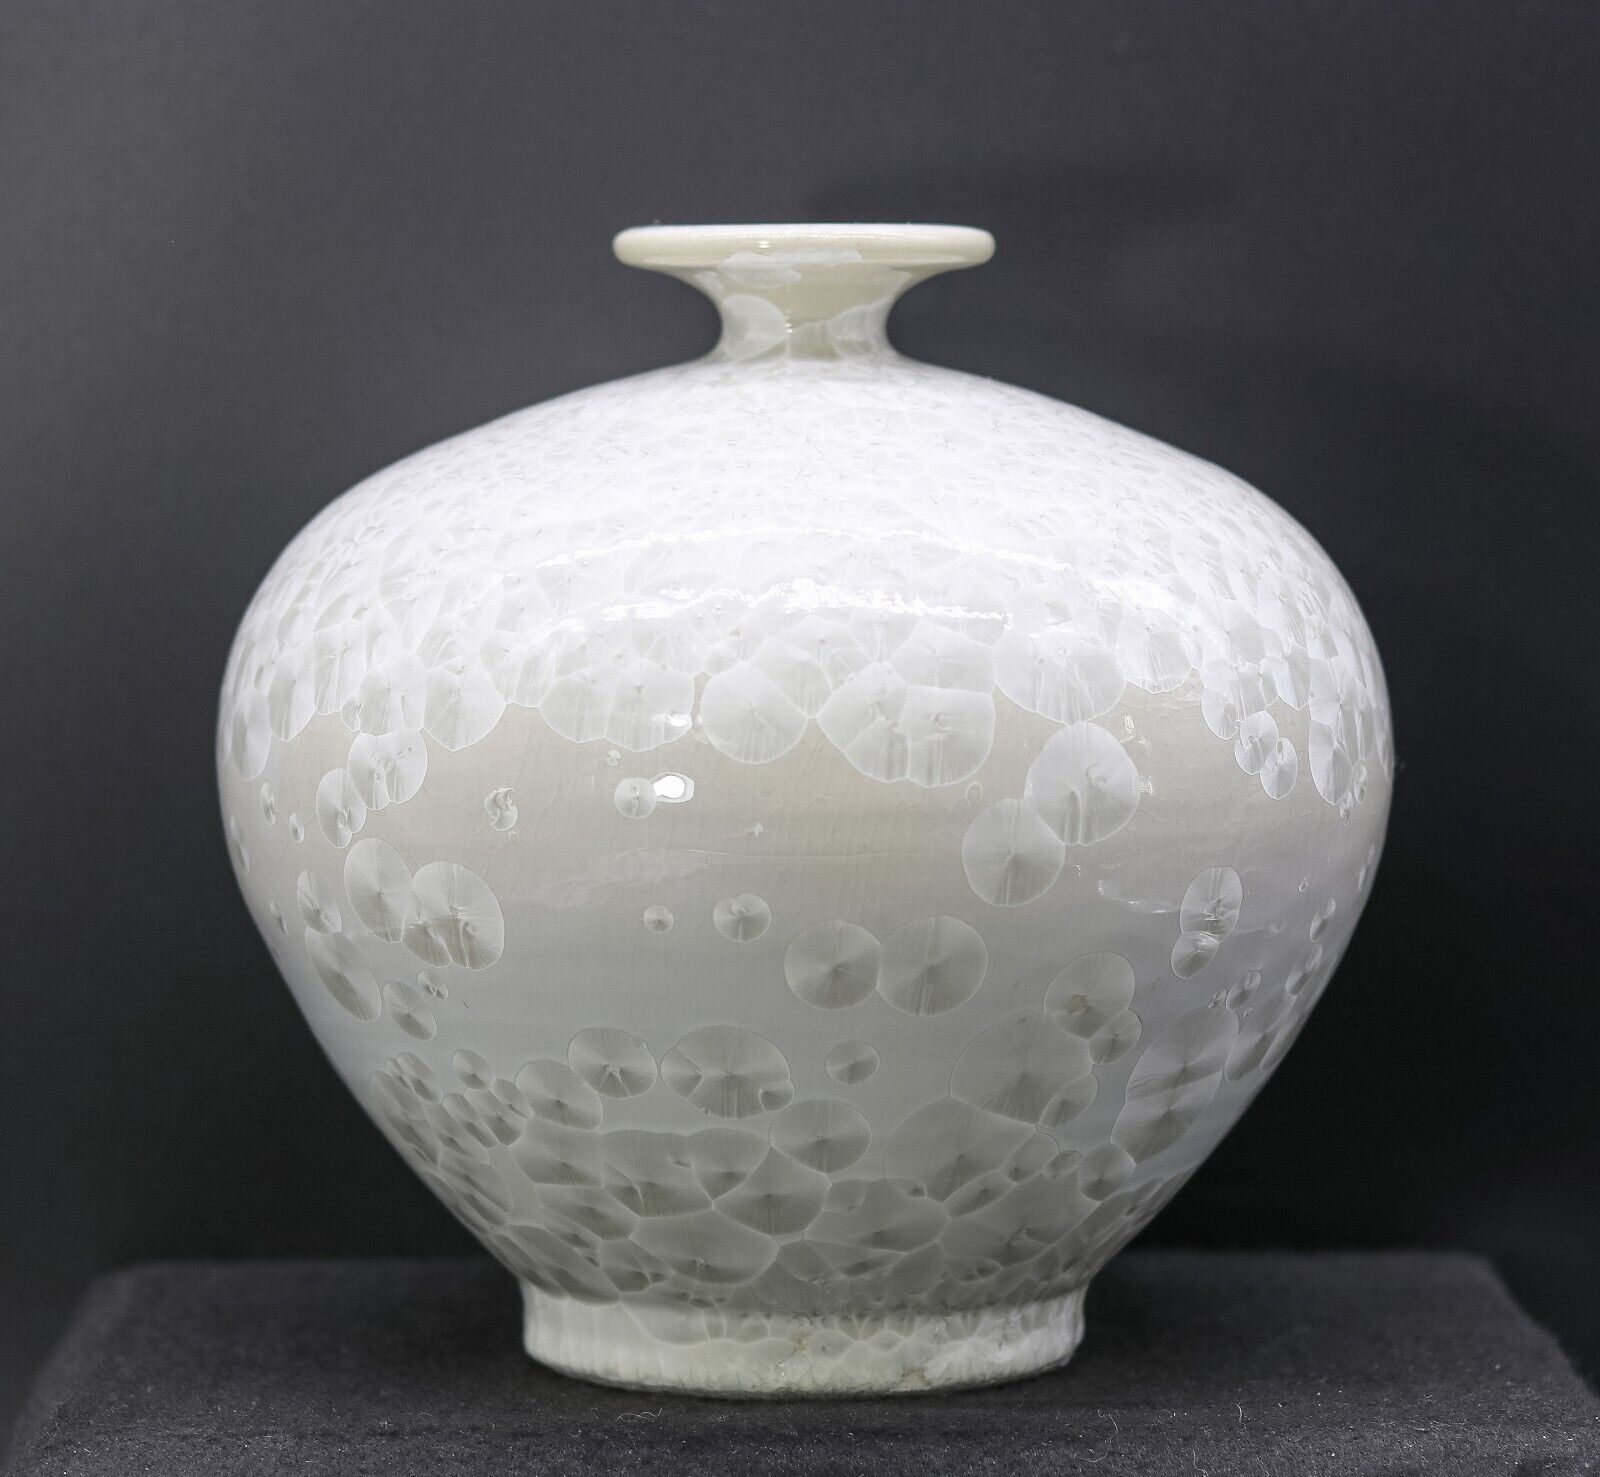 Vase Crystal Shell Pomegranate Shades of White has Maker's Mark